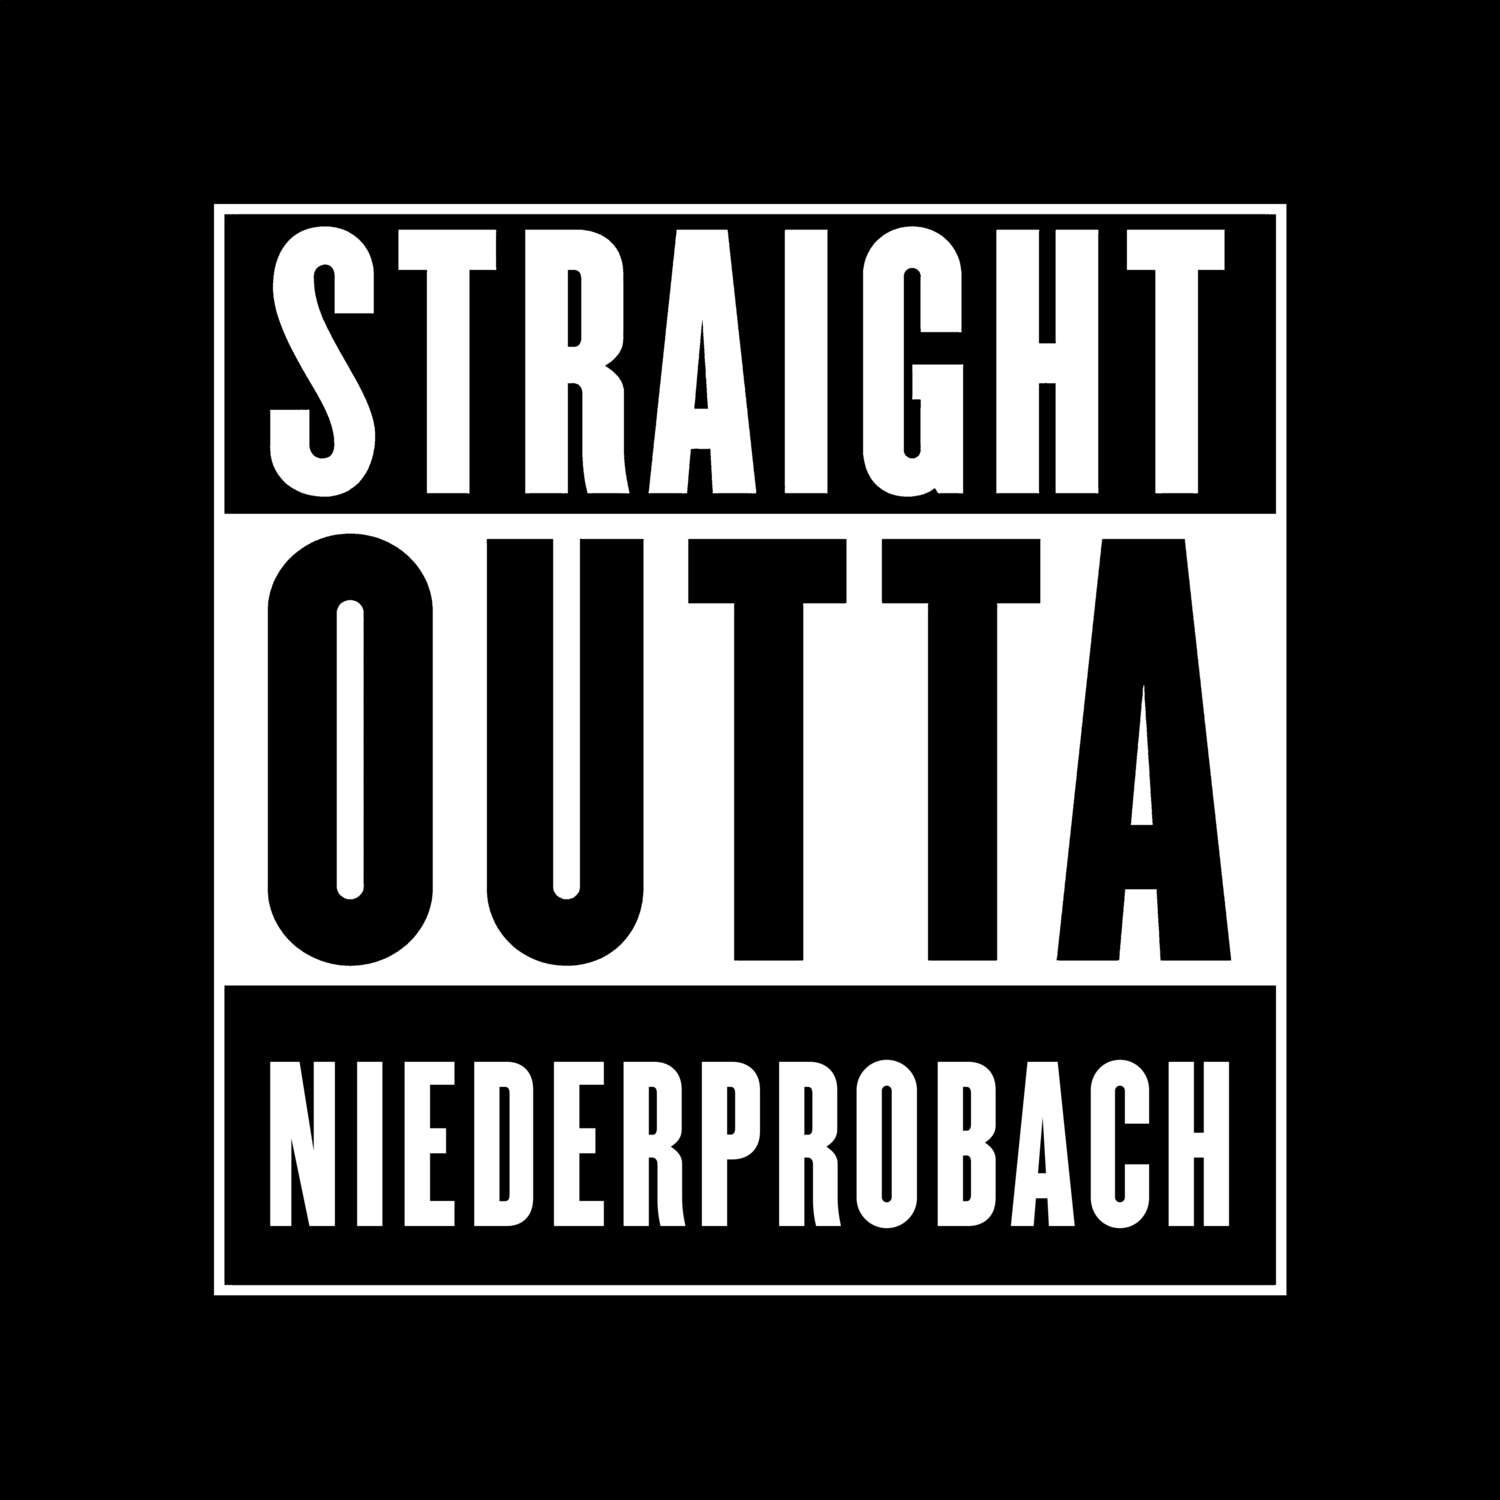 Niederprobach T-Shirt »Straight Outta«